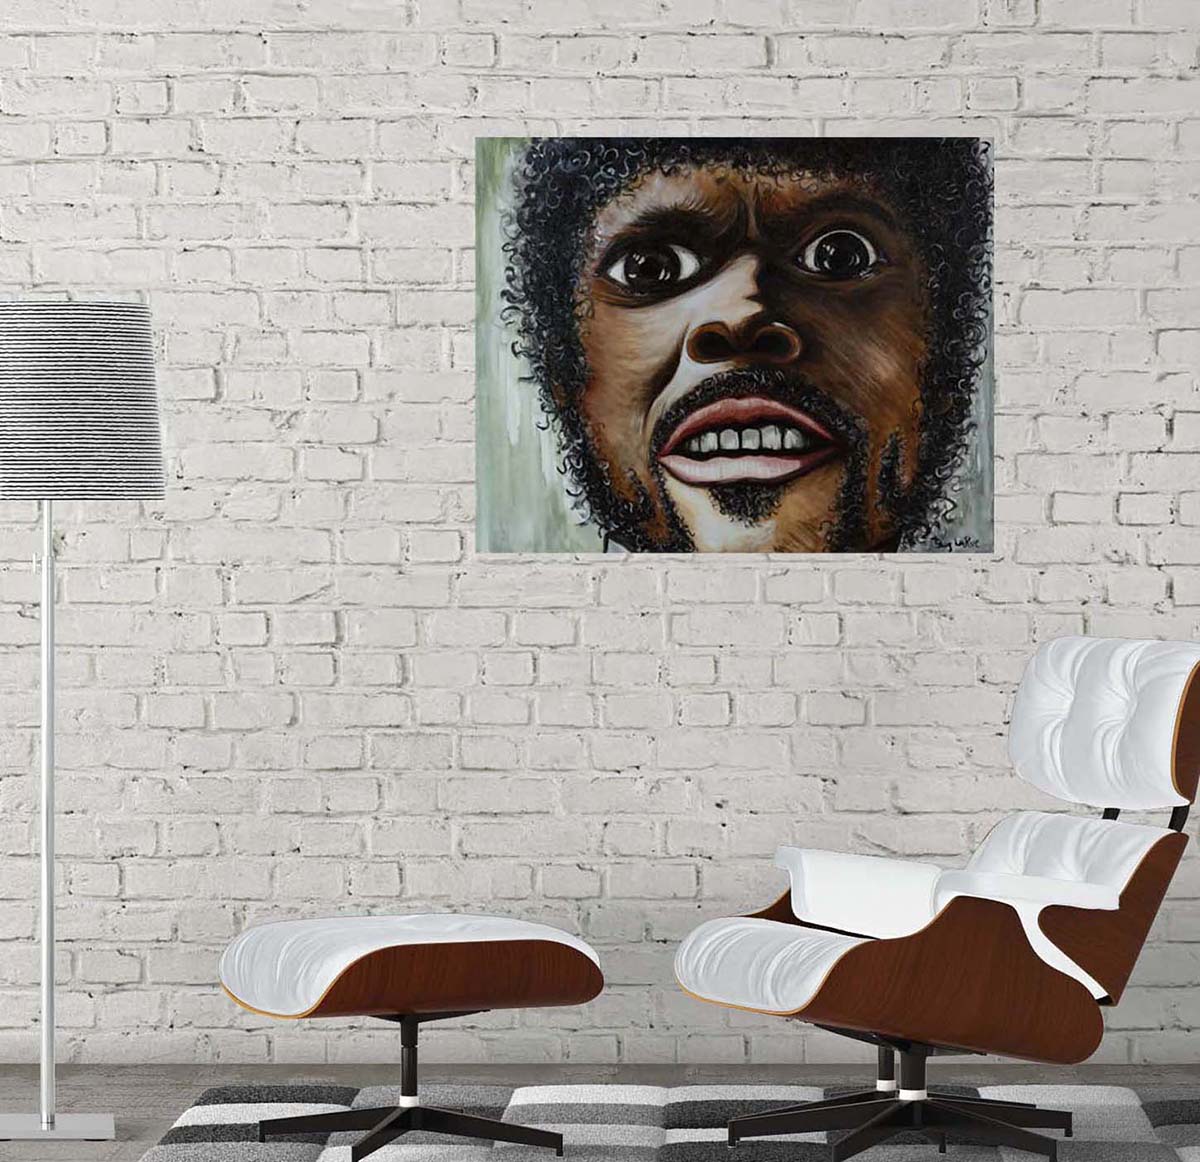 Sam's Furious Anger print on a white brick wall near a lounge chair